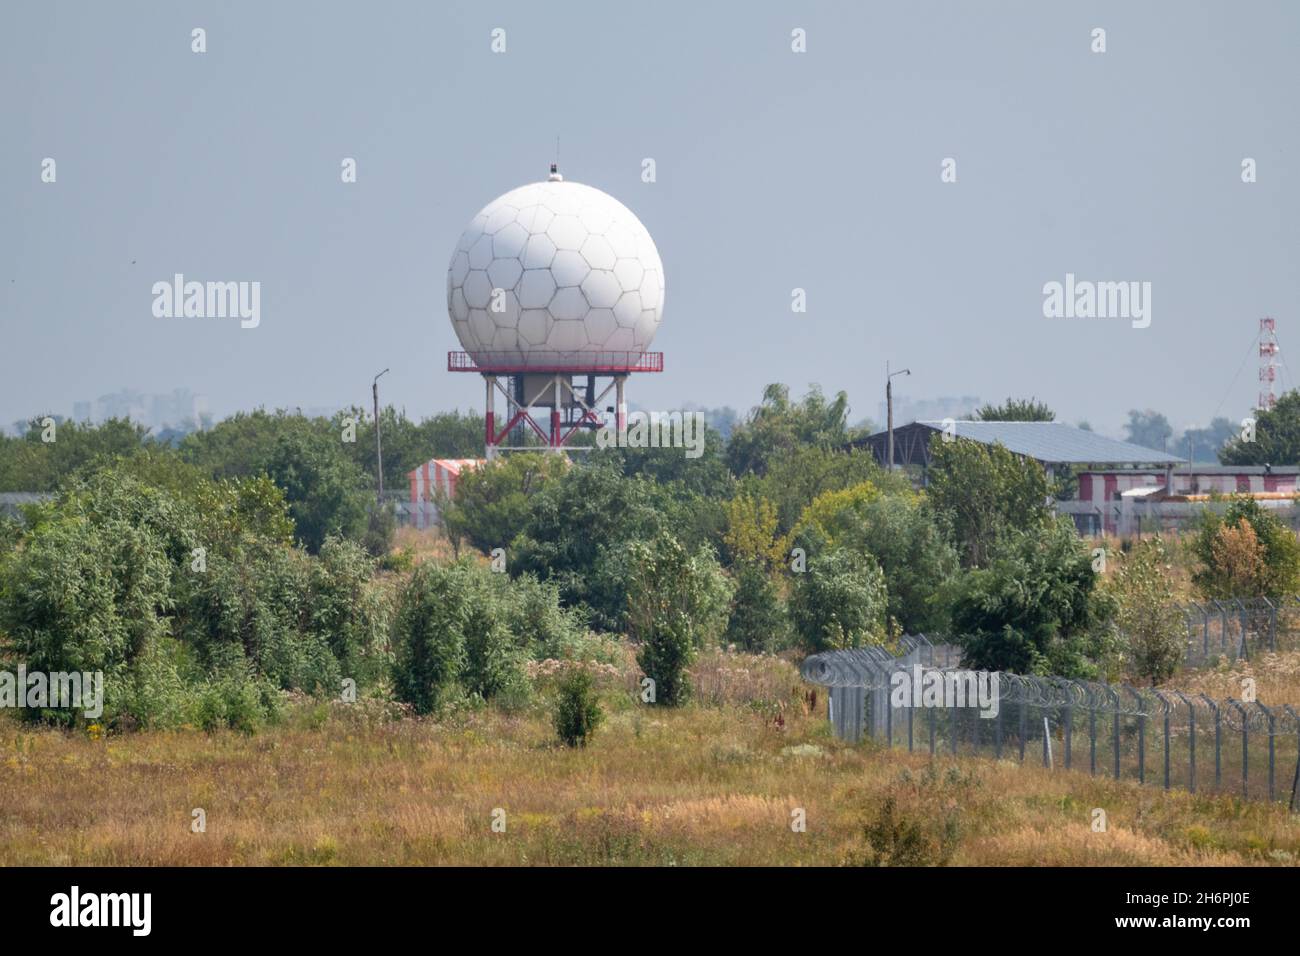 Aeroporto internazionale torre radar a sfera bianca a Kharkiv, Ucraina. Speciale radome a torre a microonde in forma esagonale nel verde Foto Stock